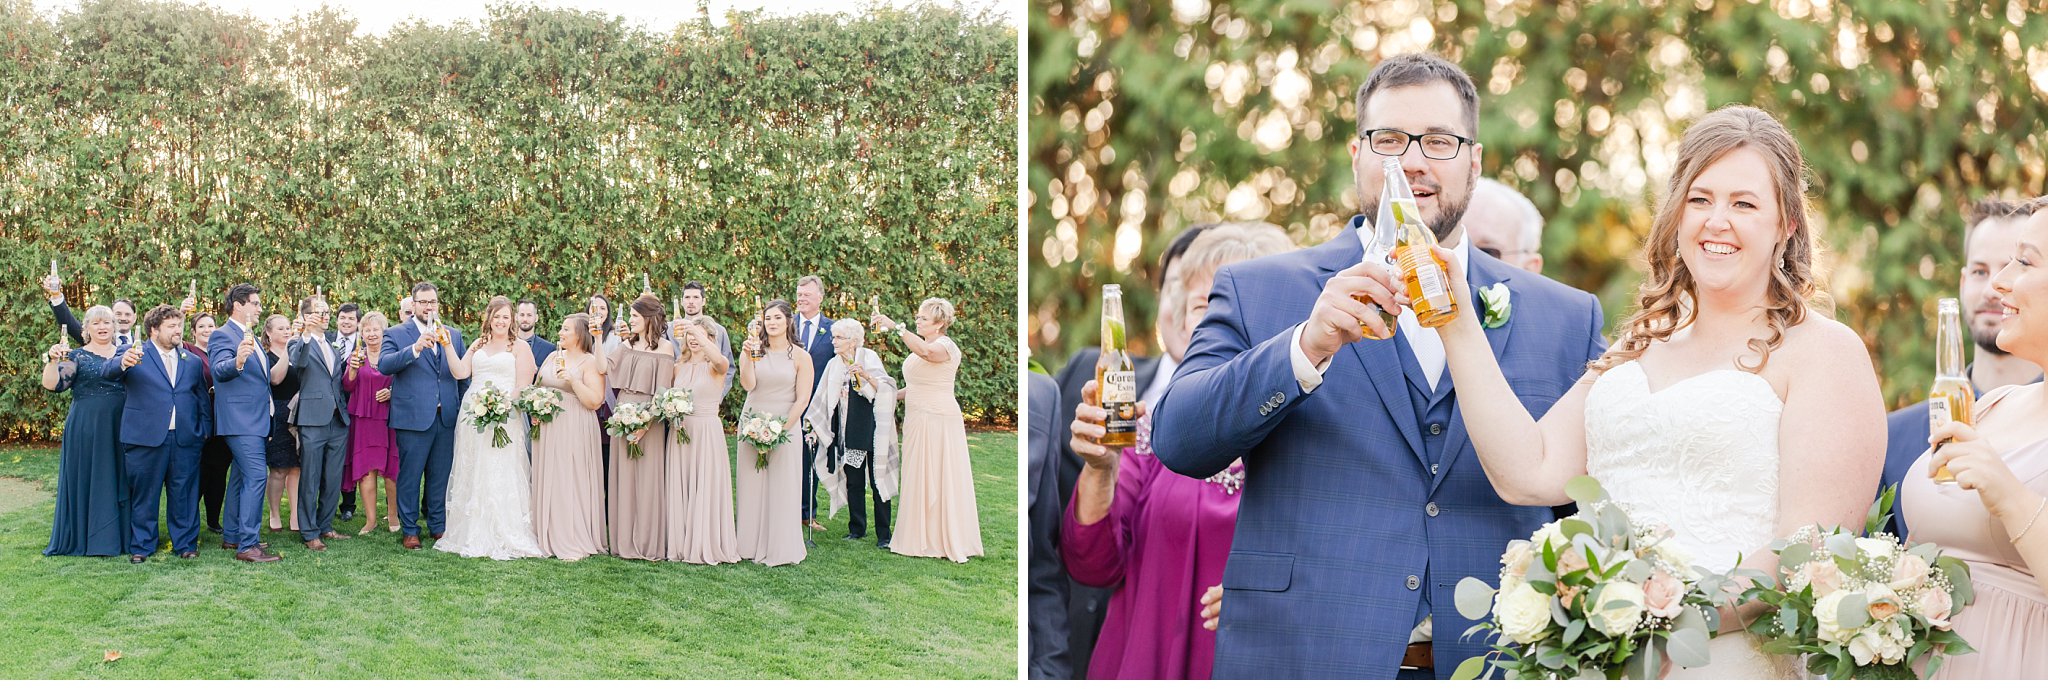 wedding guests share corona beers at pandemic wedding